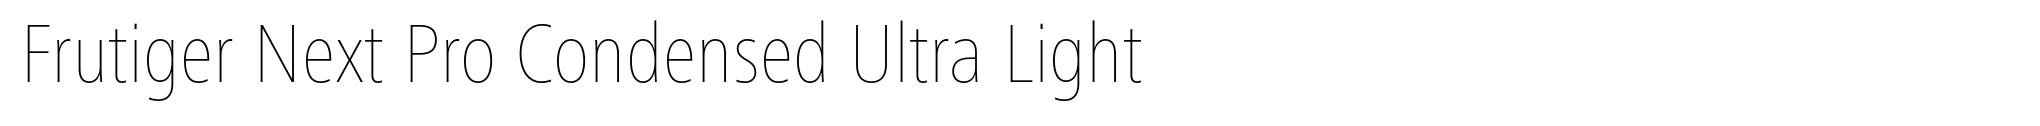 Frutiger Next Pro Condensed Ultra Light image